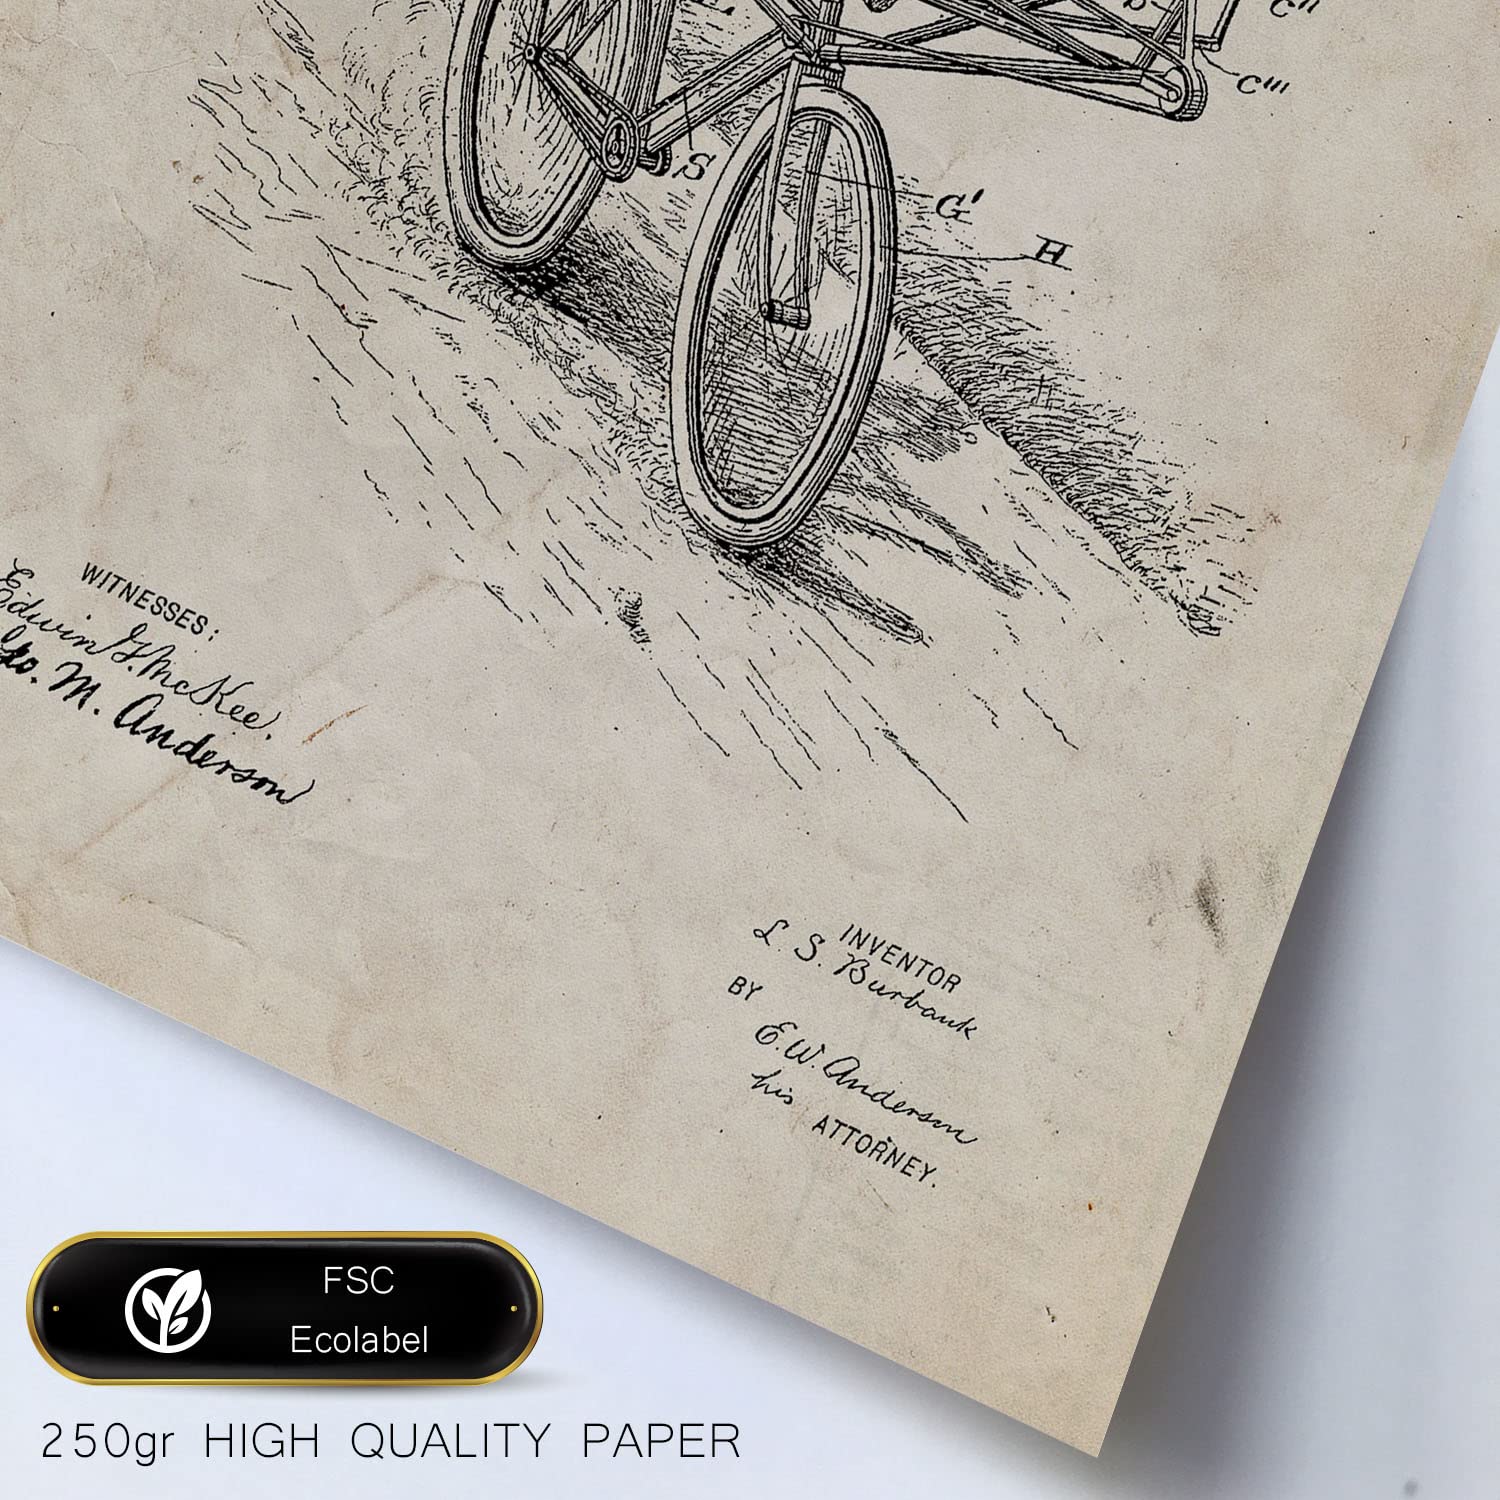 Set de 6 láminas de patentes Bicicleta. Pósters con dibujos retro de inventos antiguos para tu hogar. Tamaños A4 y A3. .-Artwork-Nacnic-Nacnic Estudio SL